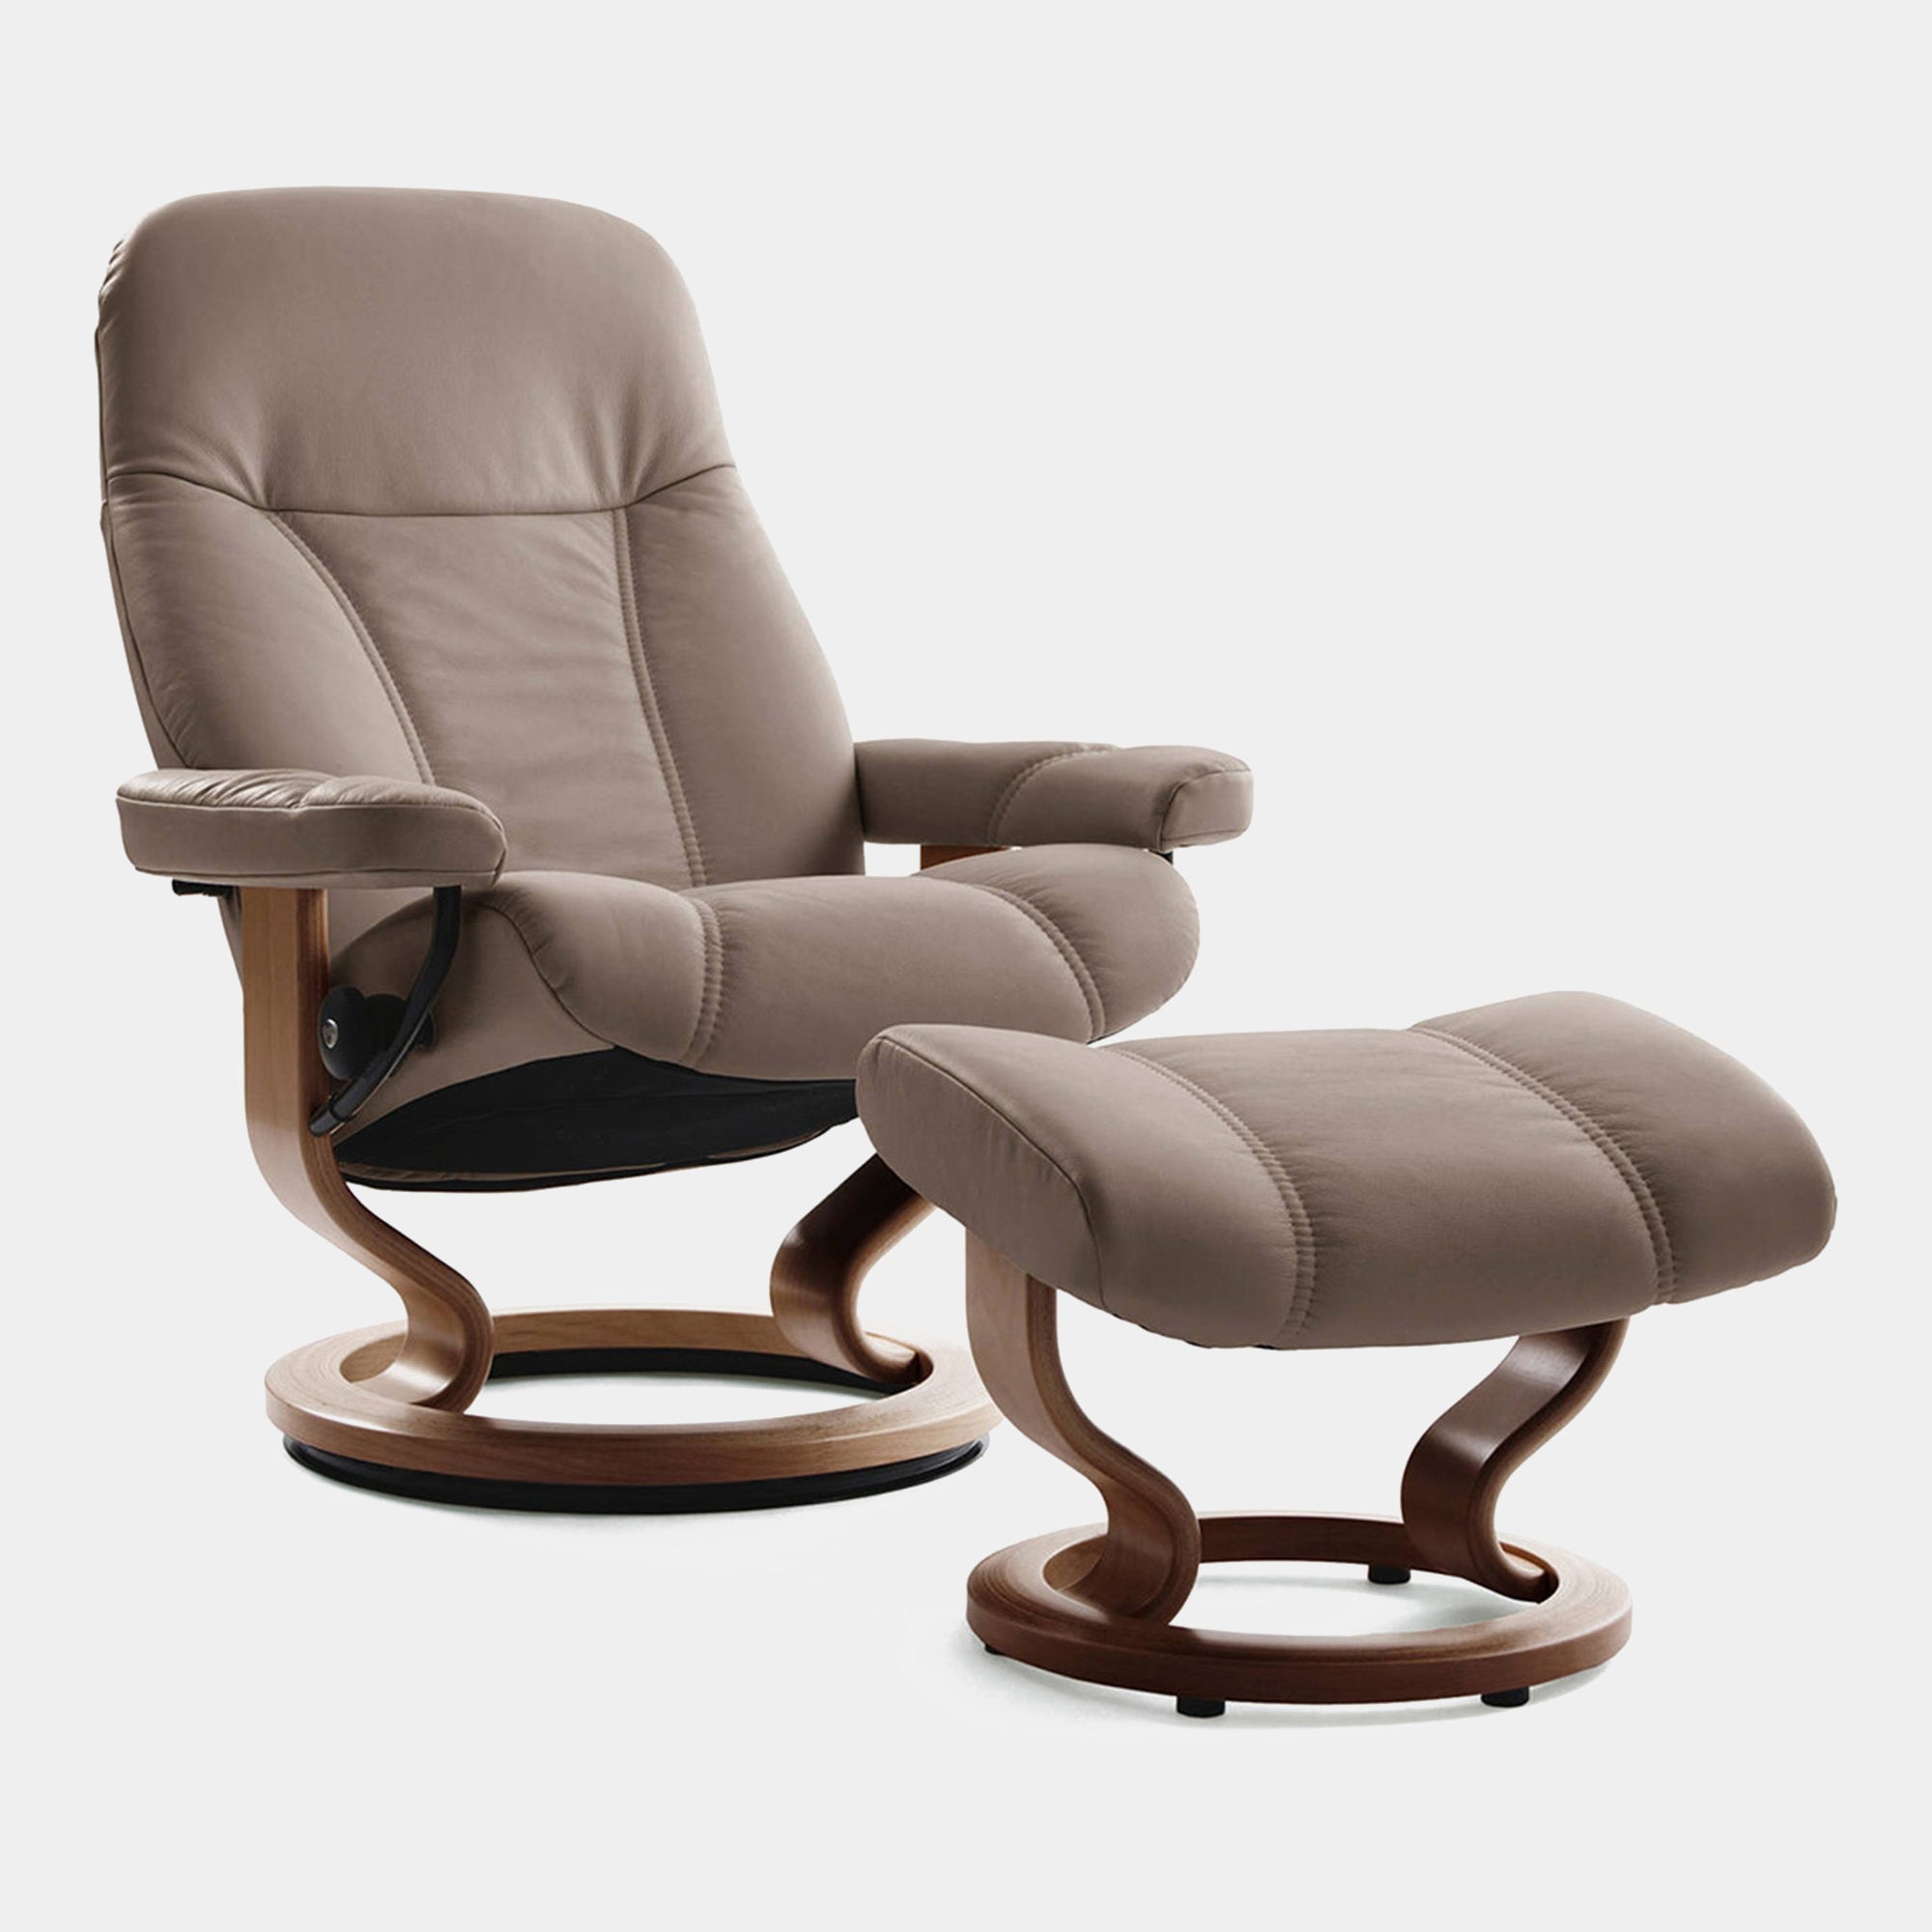 Chair & Stool Large Batick Mole Leather - Walnut Wood Finish